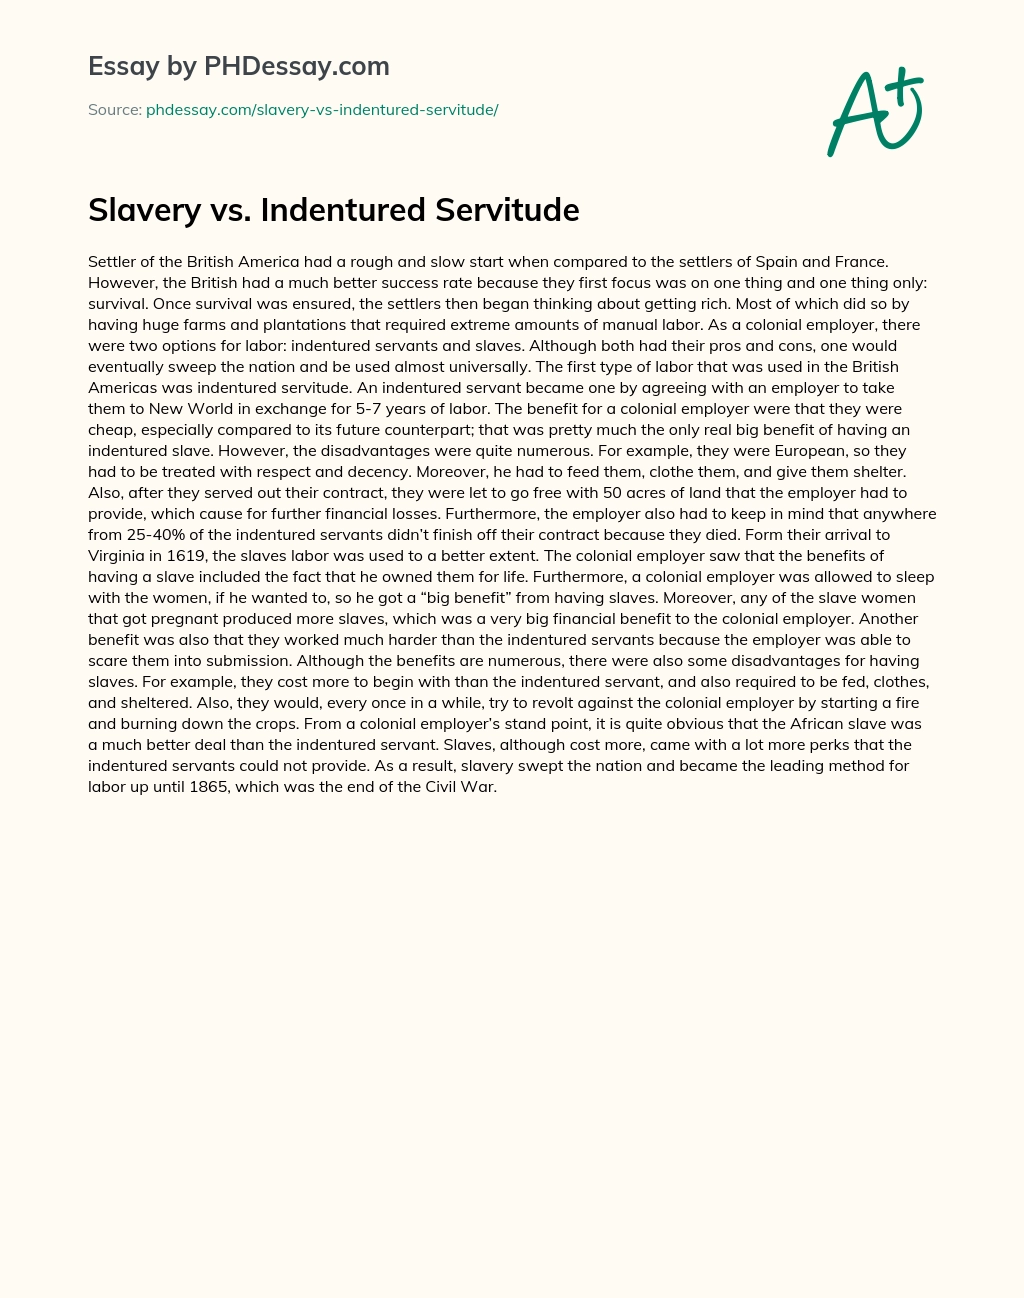 Slavery vs. Indentured Servitude essay